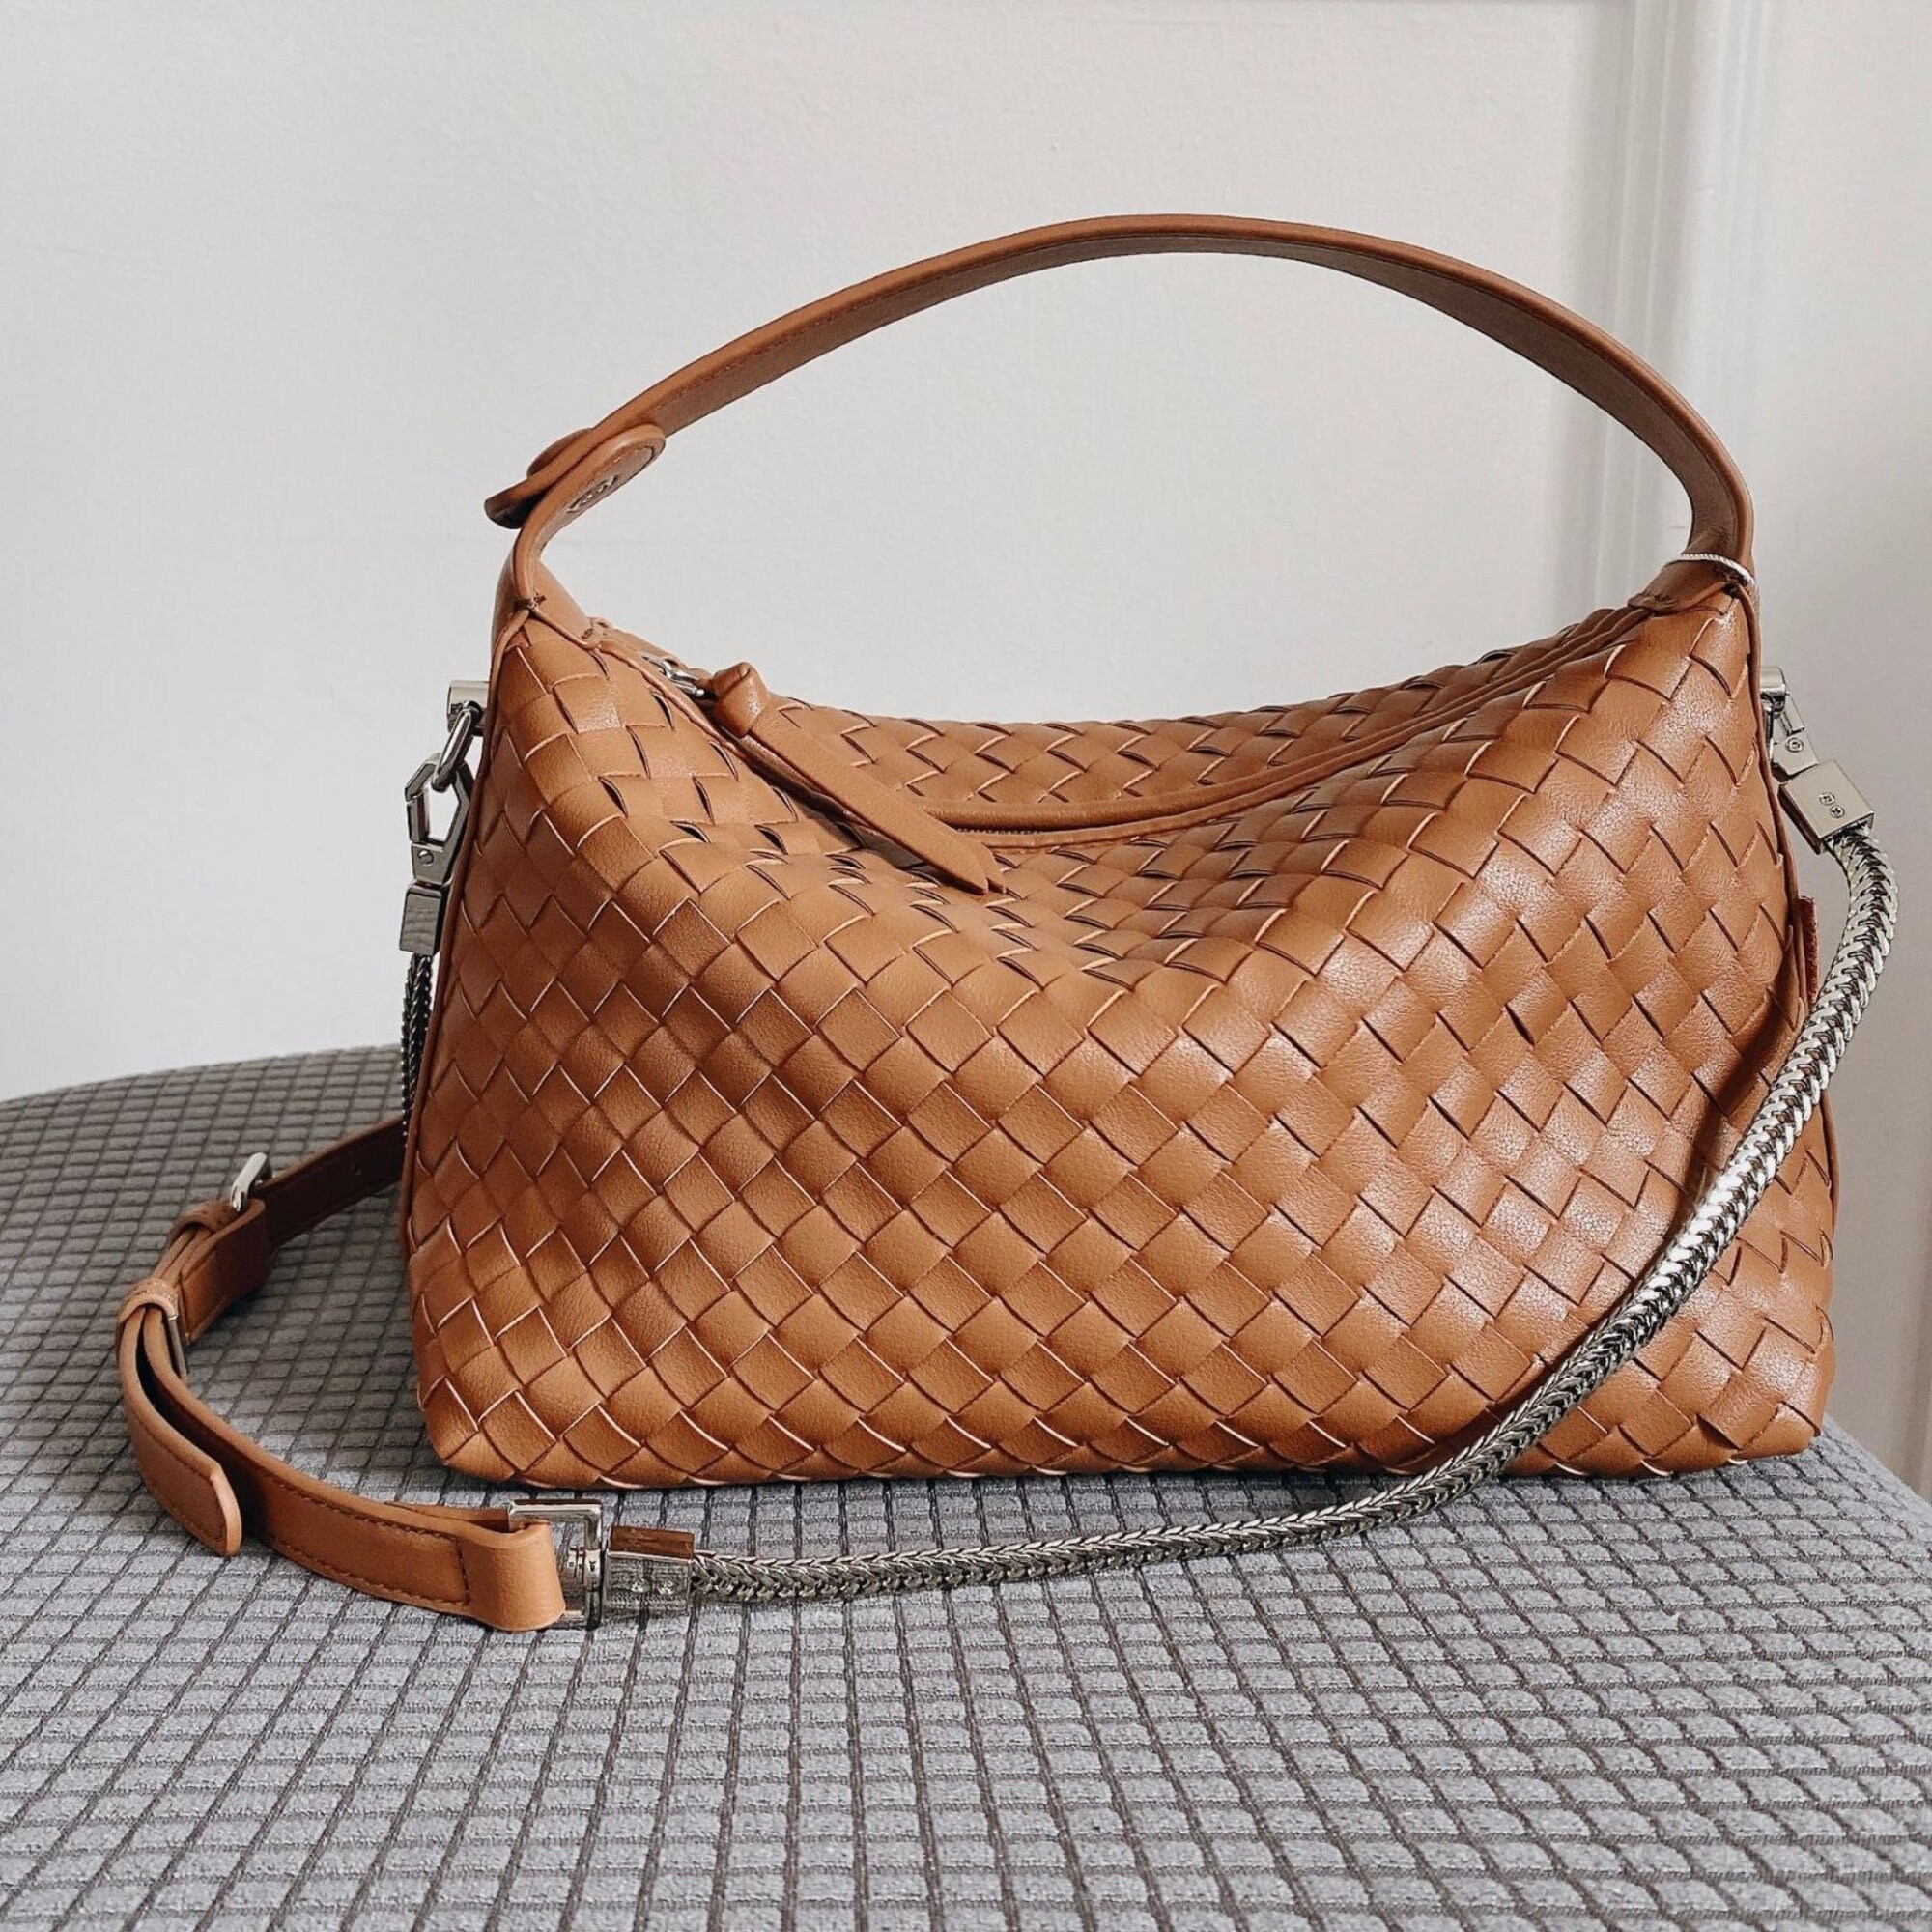  Woven Leather Hobo Bags for Women, Handmade Weaving Purse (L,  Khaki) : Handmade Products